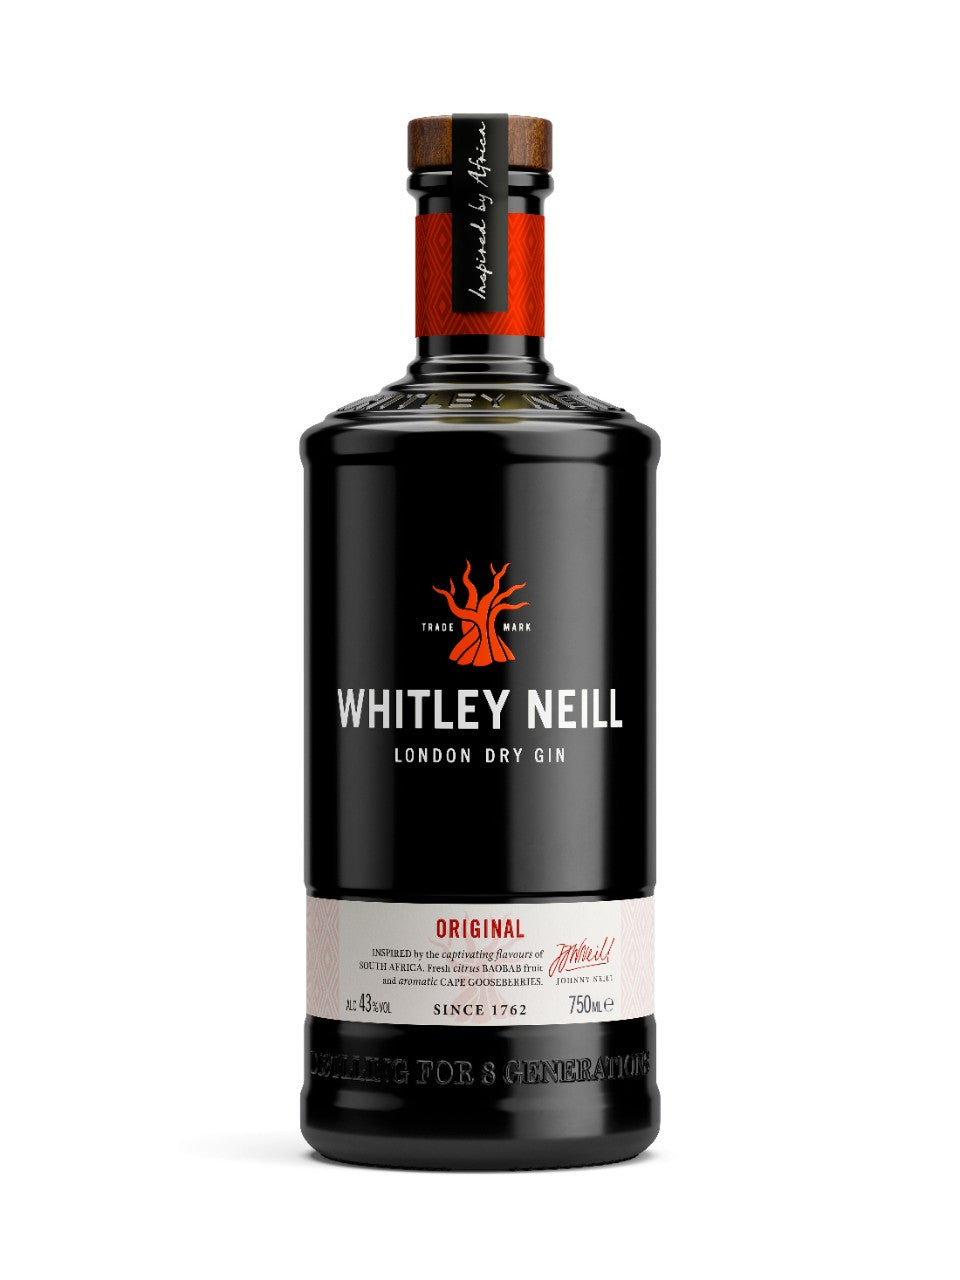 Whitley Neill Original London Dry Gin 750mL bottle